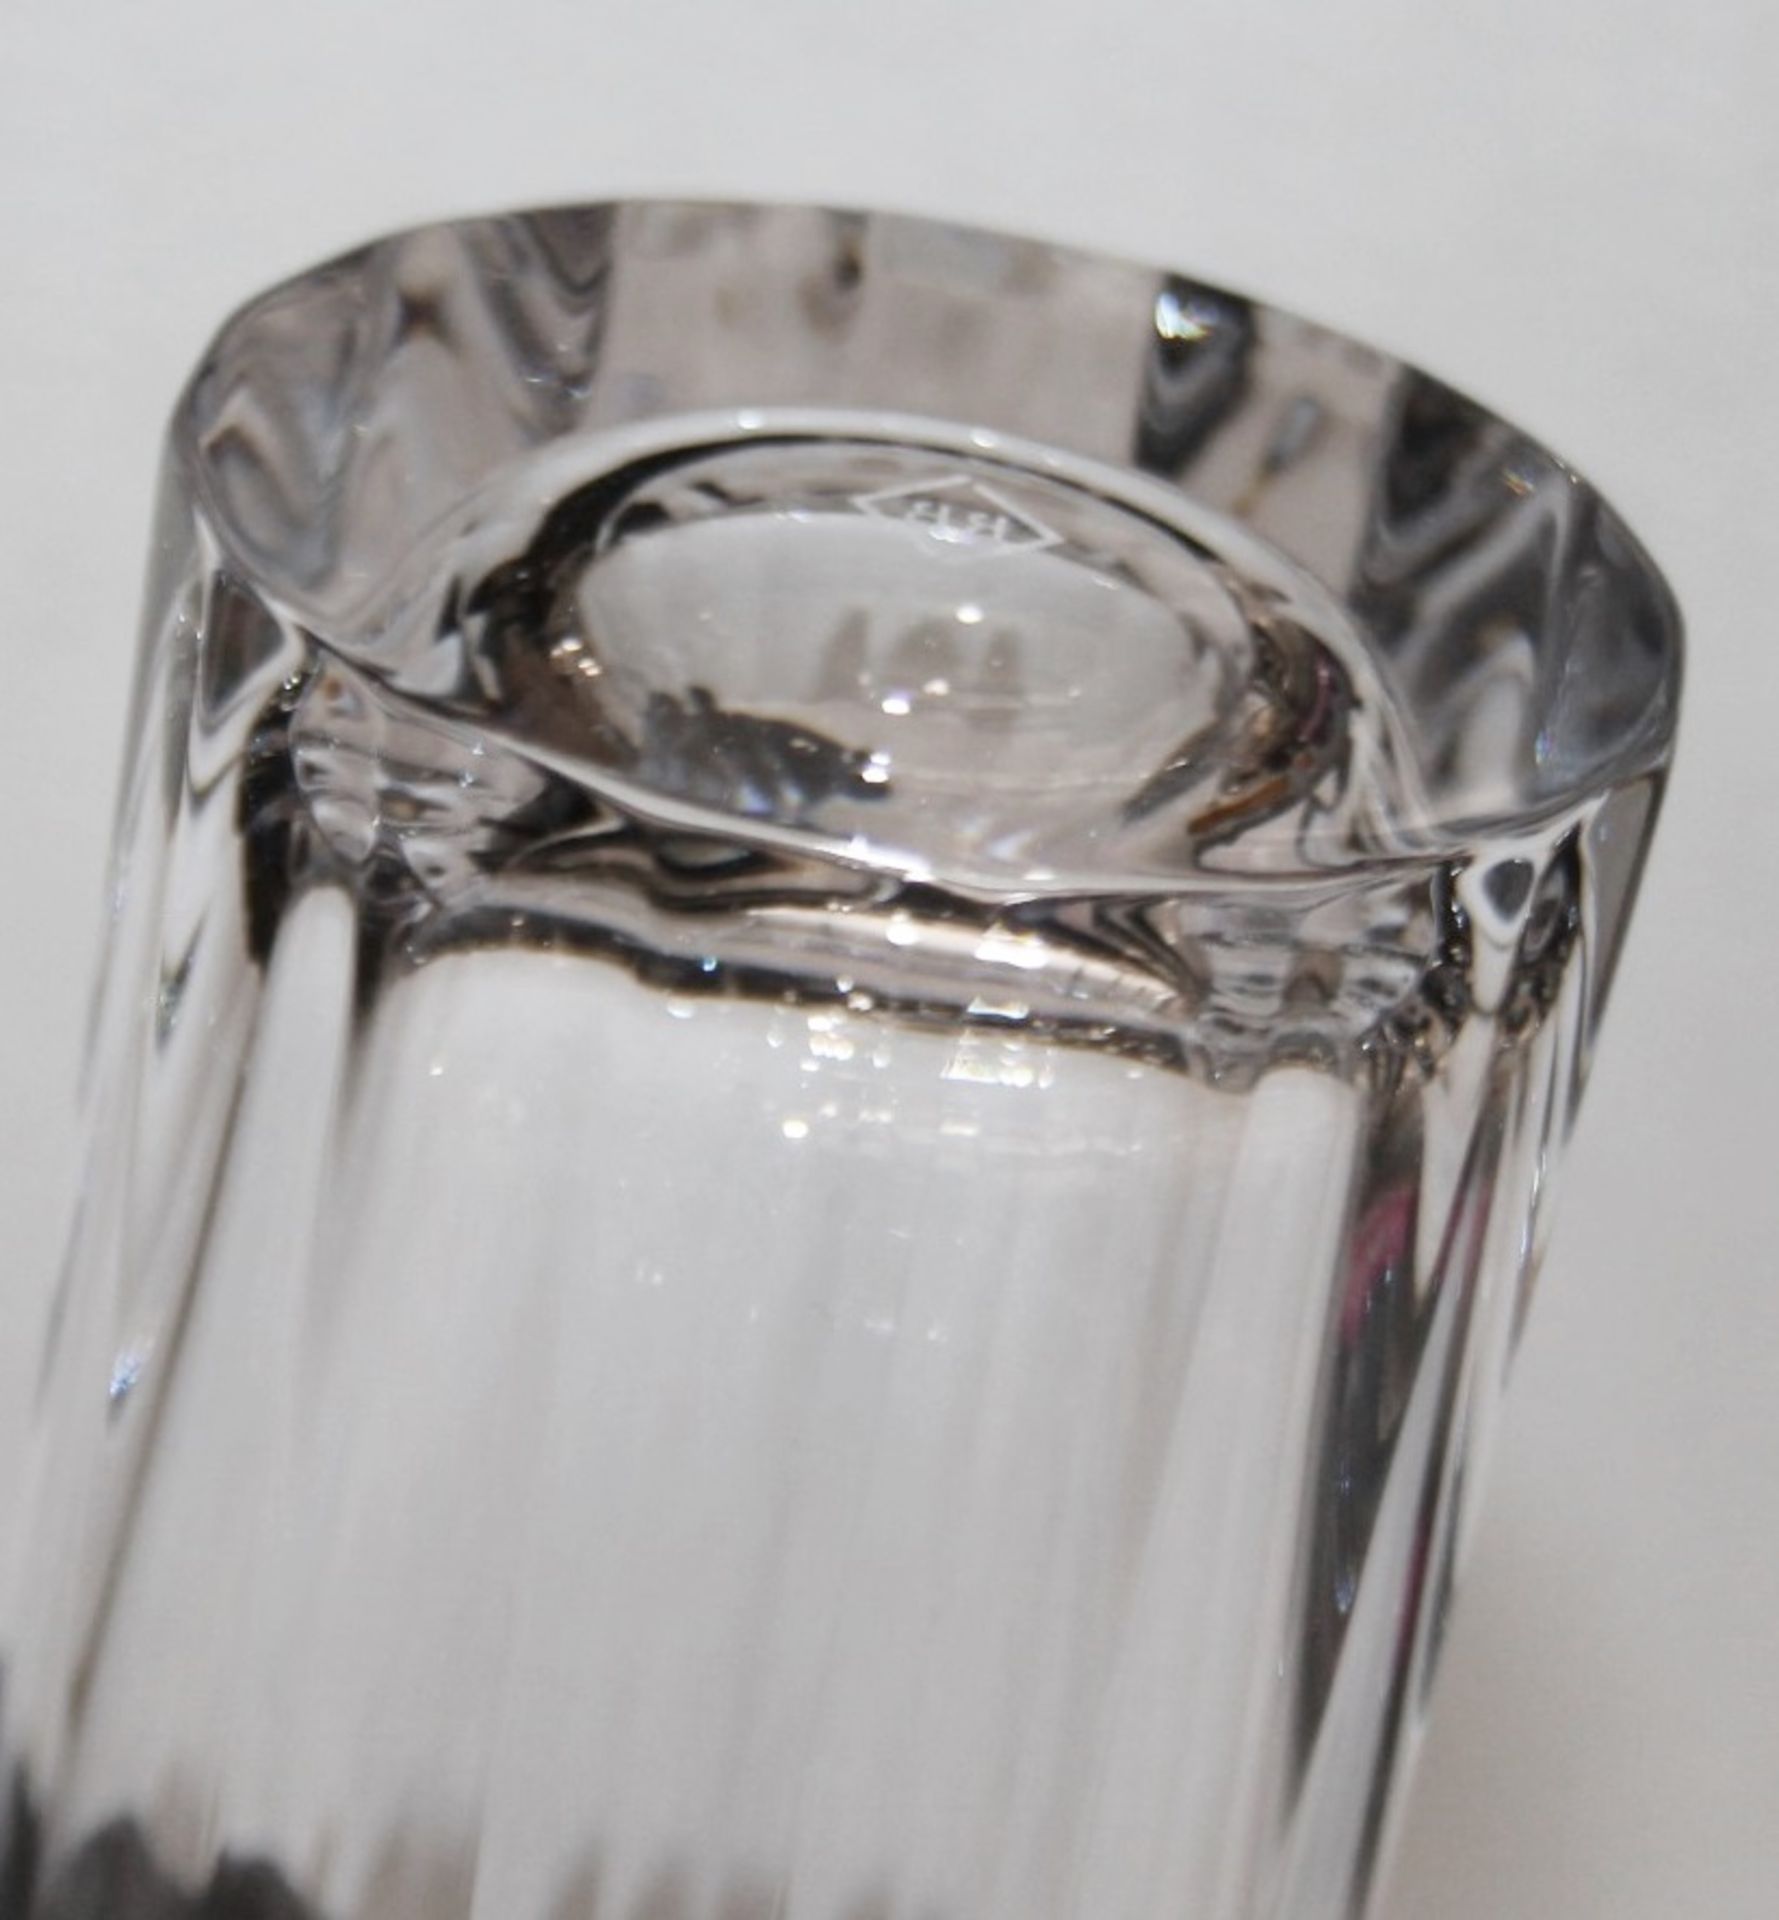 1 x RICHARD BRENDON Fluted Handmade Crystal Highball Glass (380ml) - Original Price £90.00 - Image 6 of 9